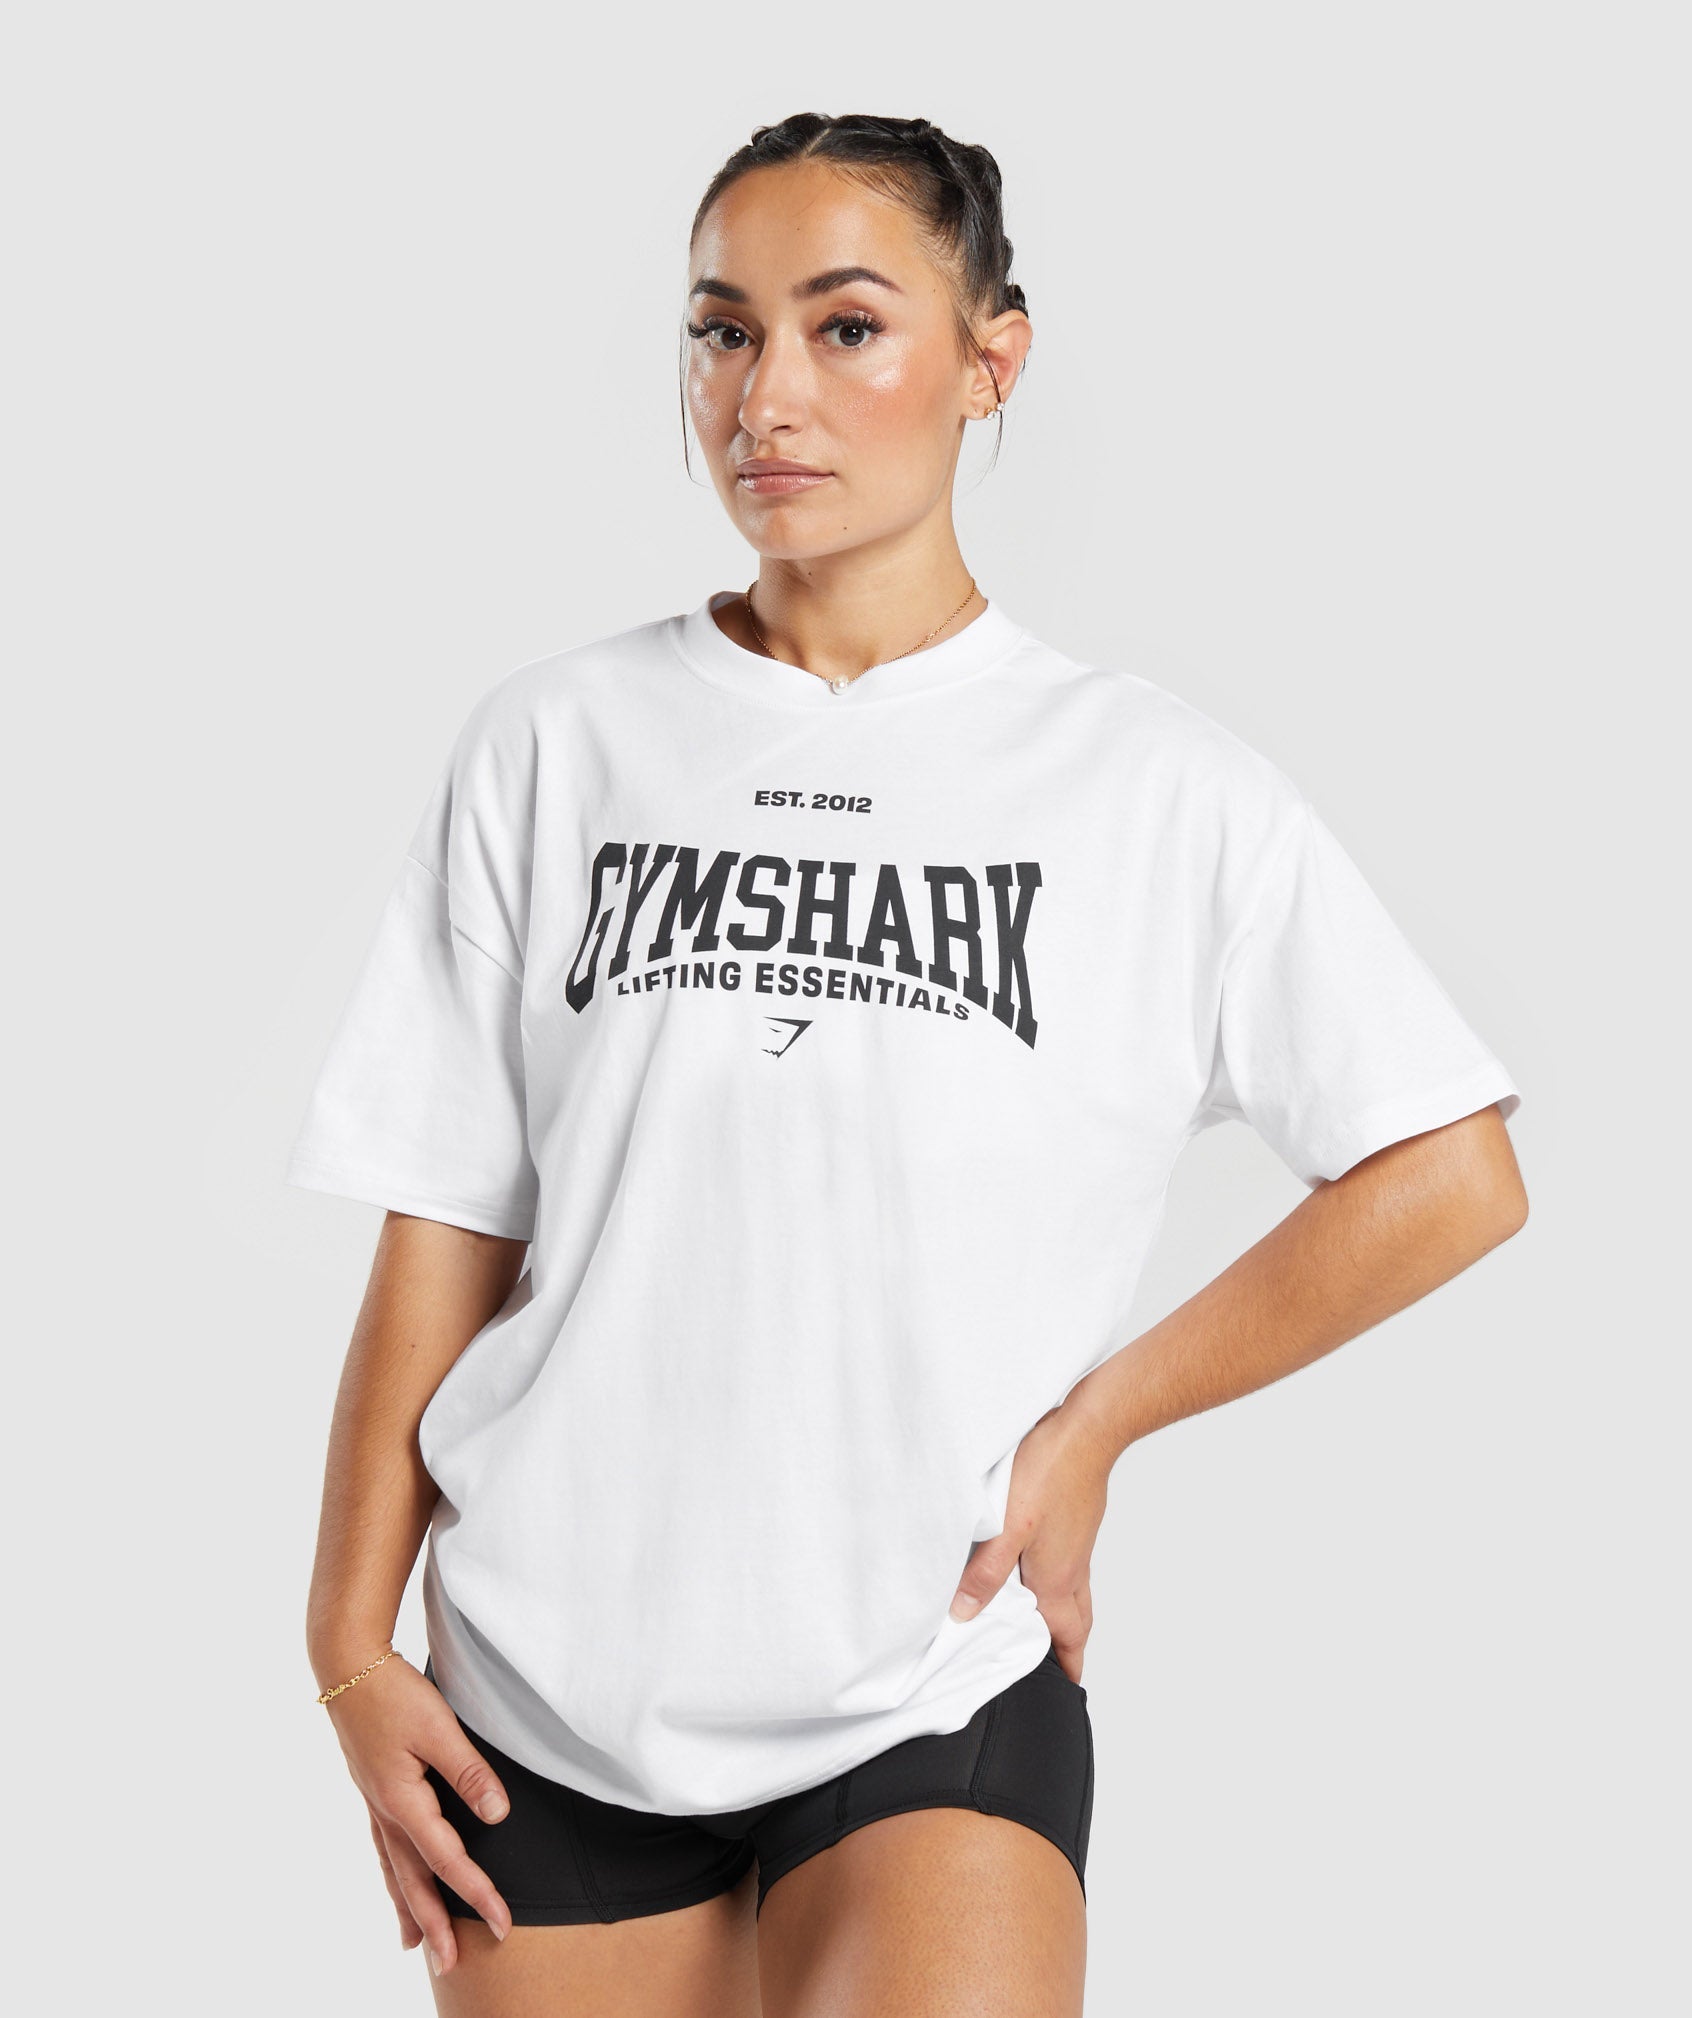 Gymshark Lifting Essentials Oversized T-shirt - Black